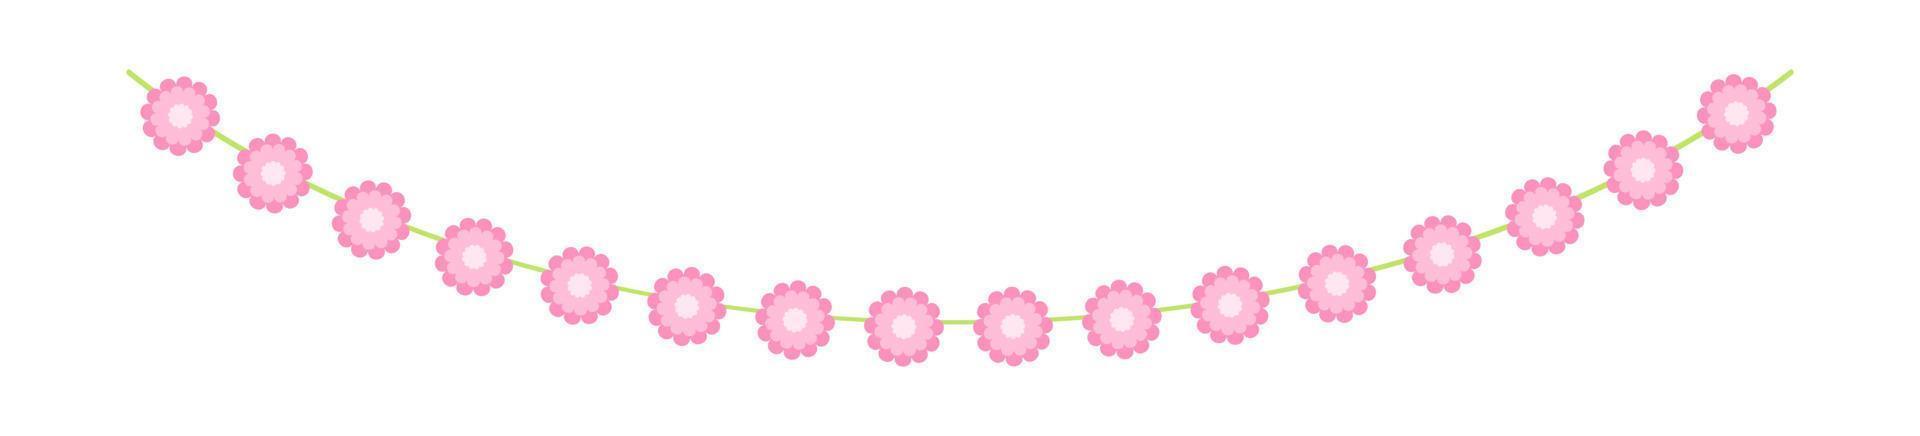 Cute spring floral garland illustration. Flower buntings for springtime designs. vector